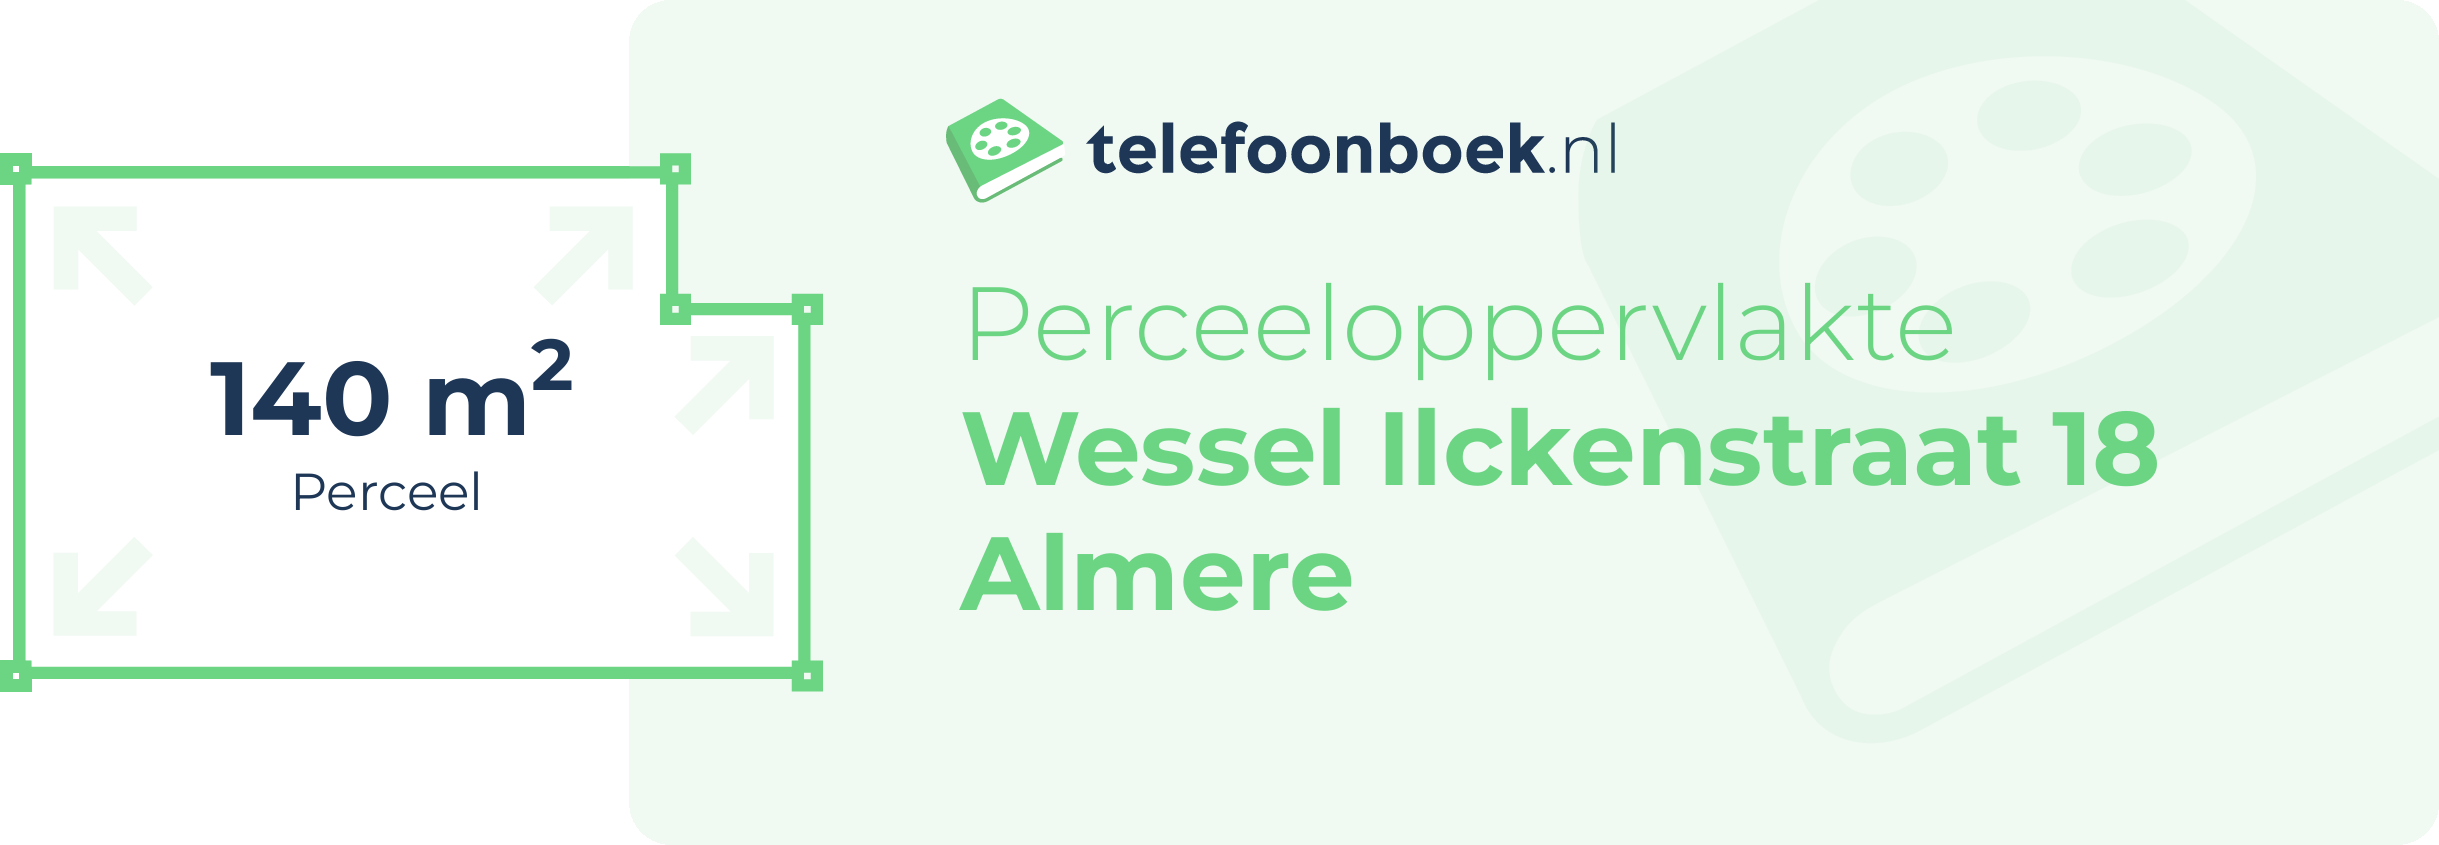 Perceeloppervlakte Wessel Ilckenstraat 18 Almere